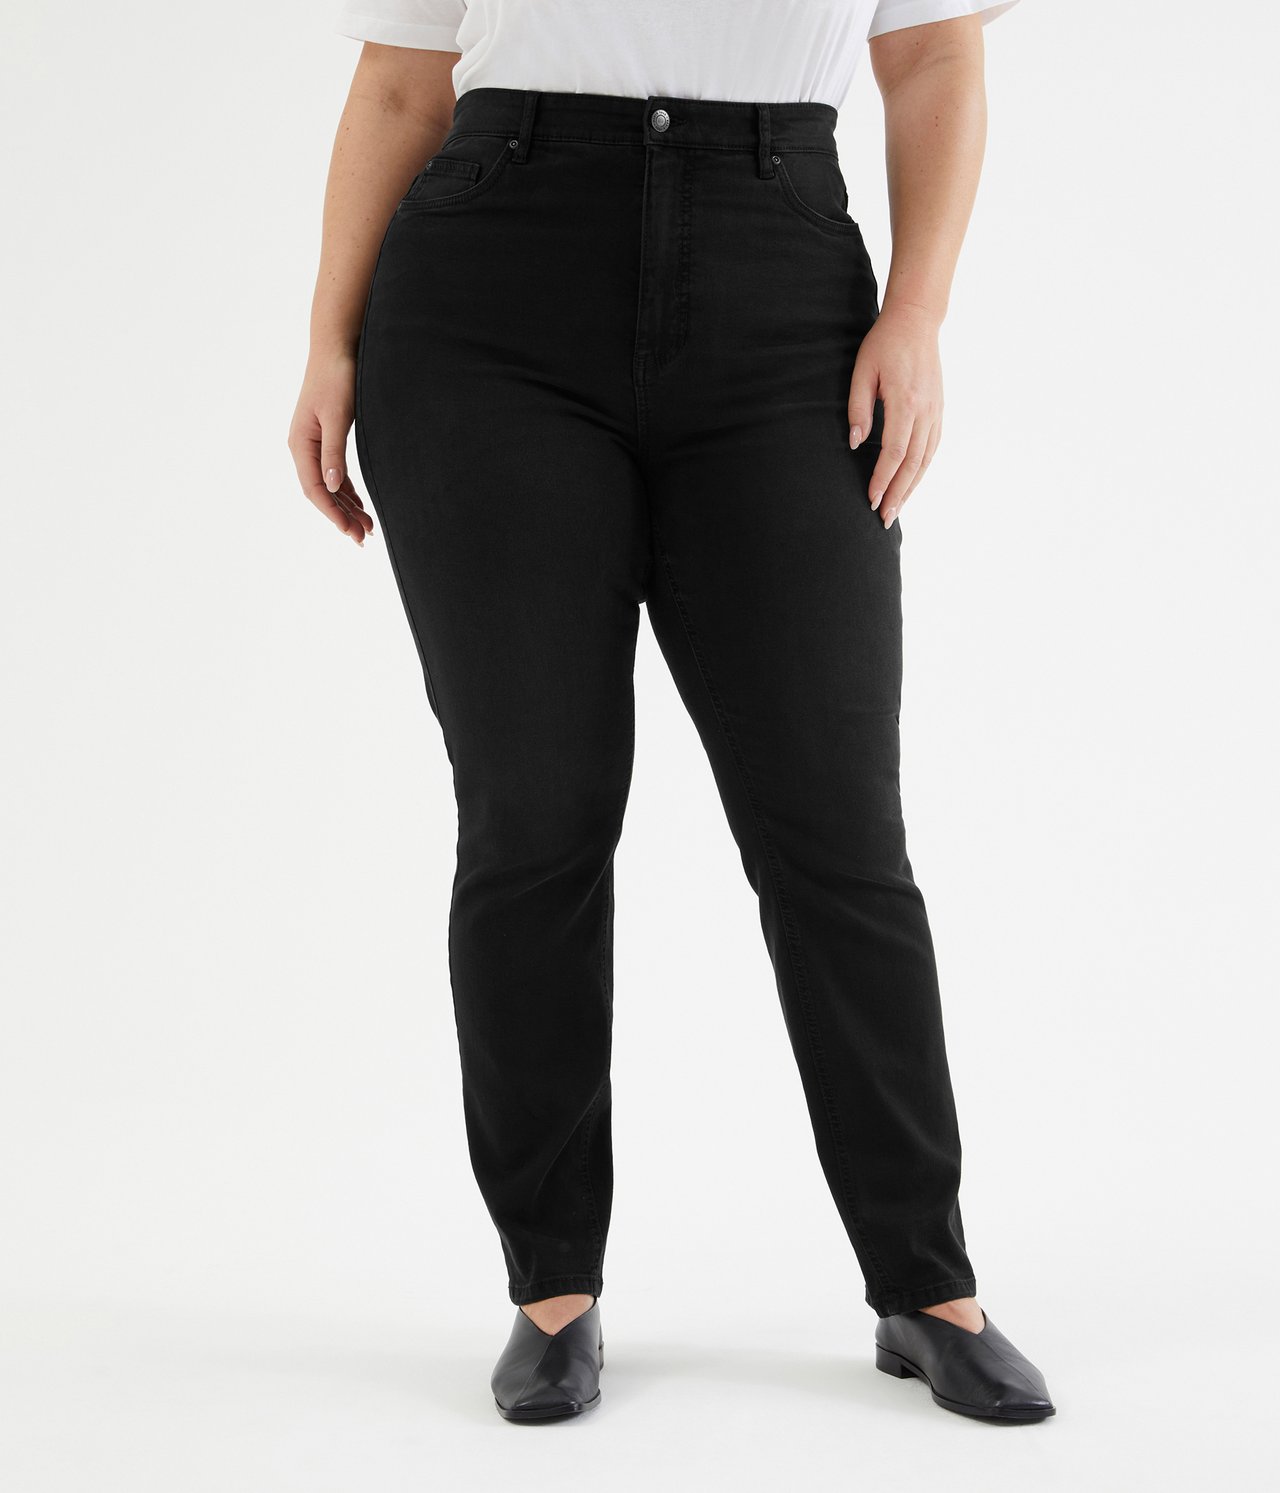 Jenny jeans straight slim fit Svart denim - 44 - 1